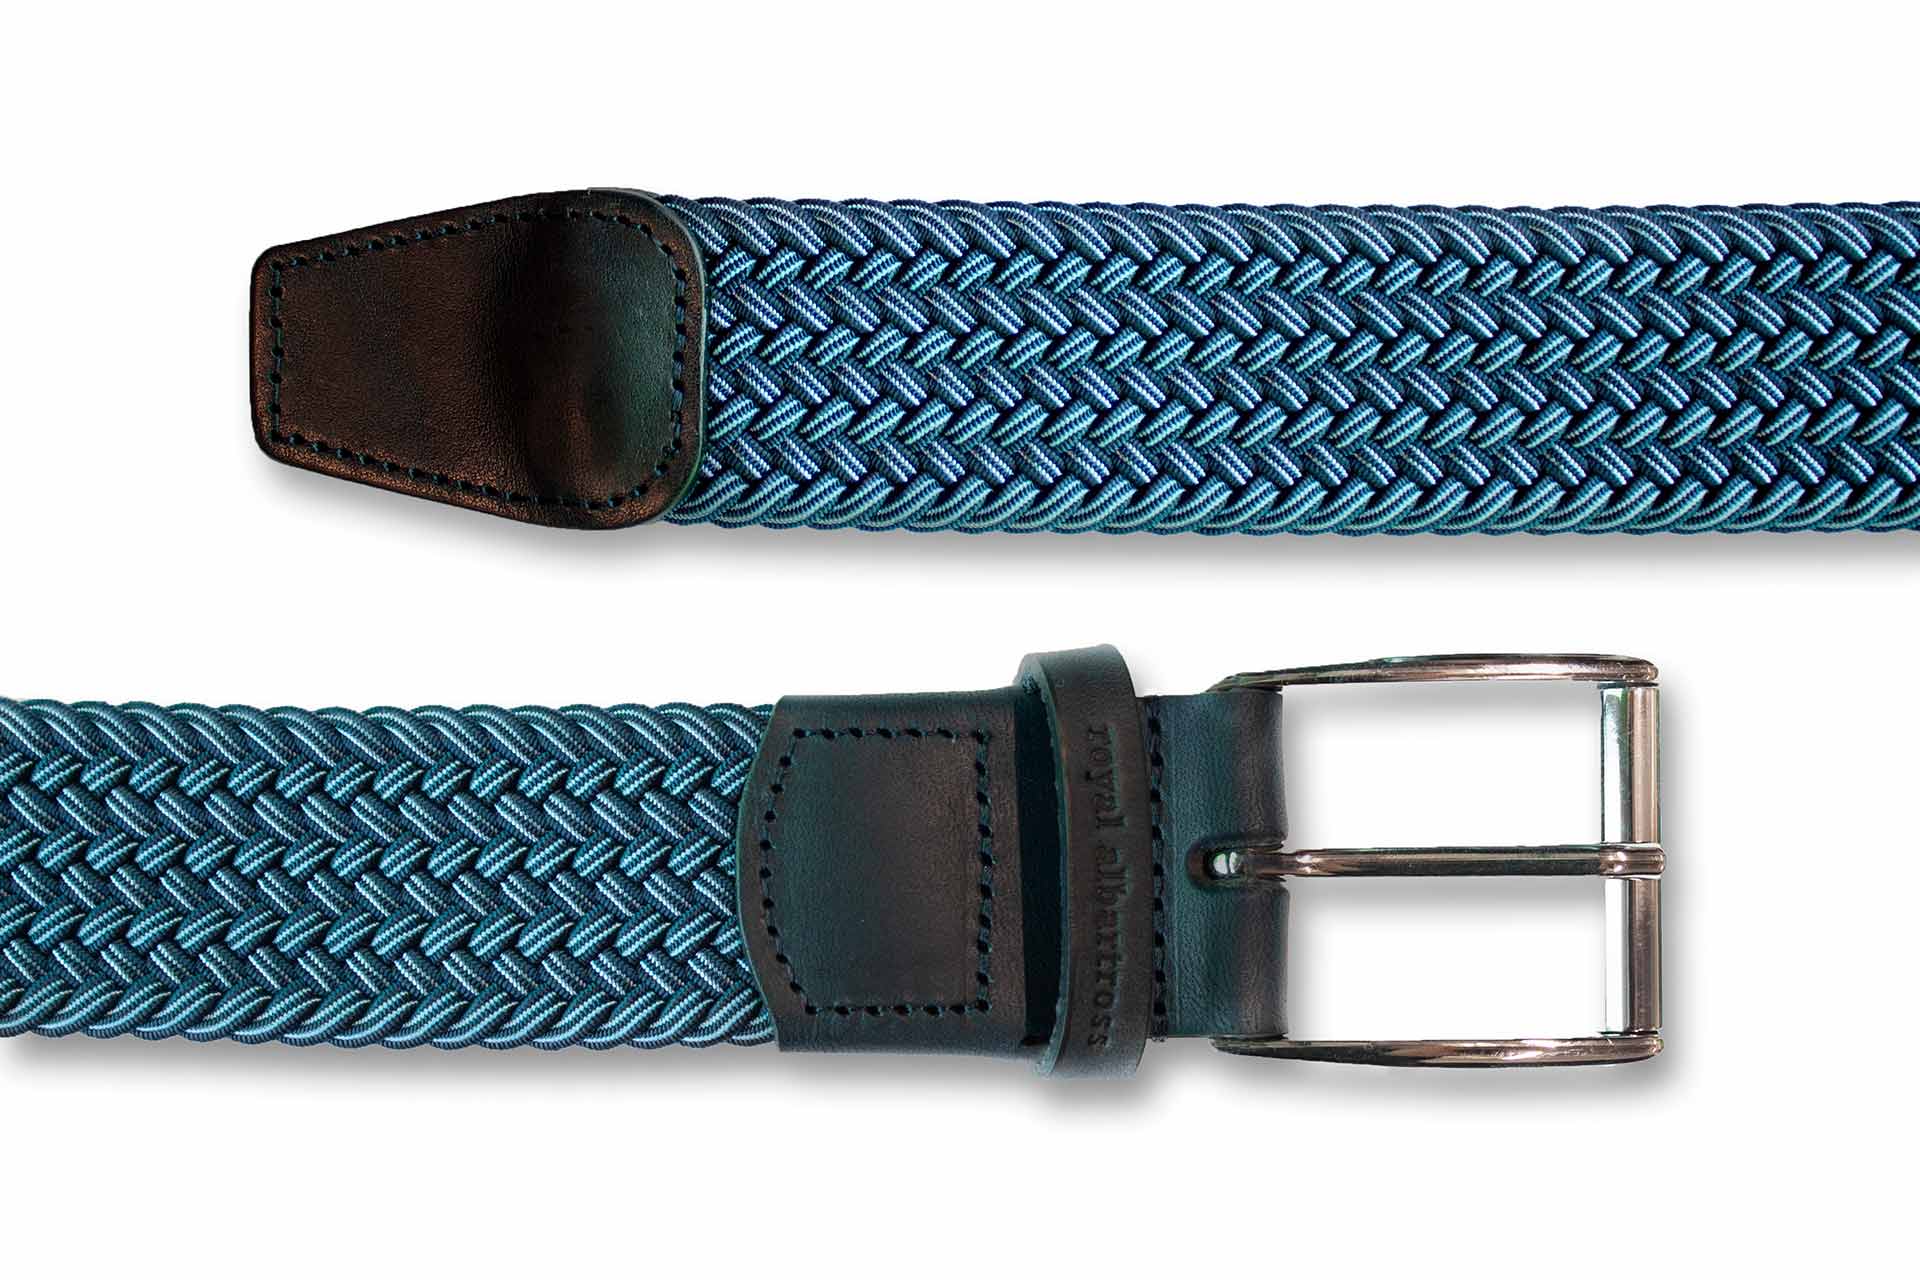 Men's Stretch Woven Blue & White Belt – Mugsy